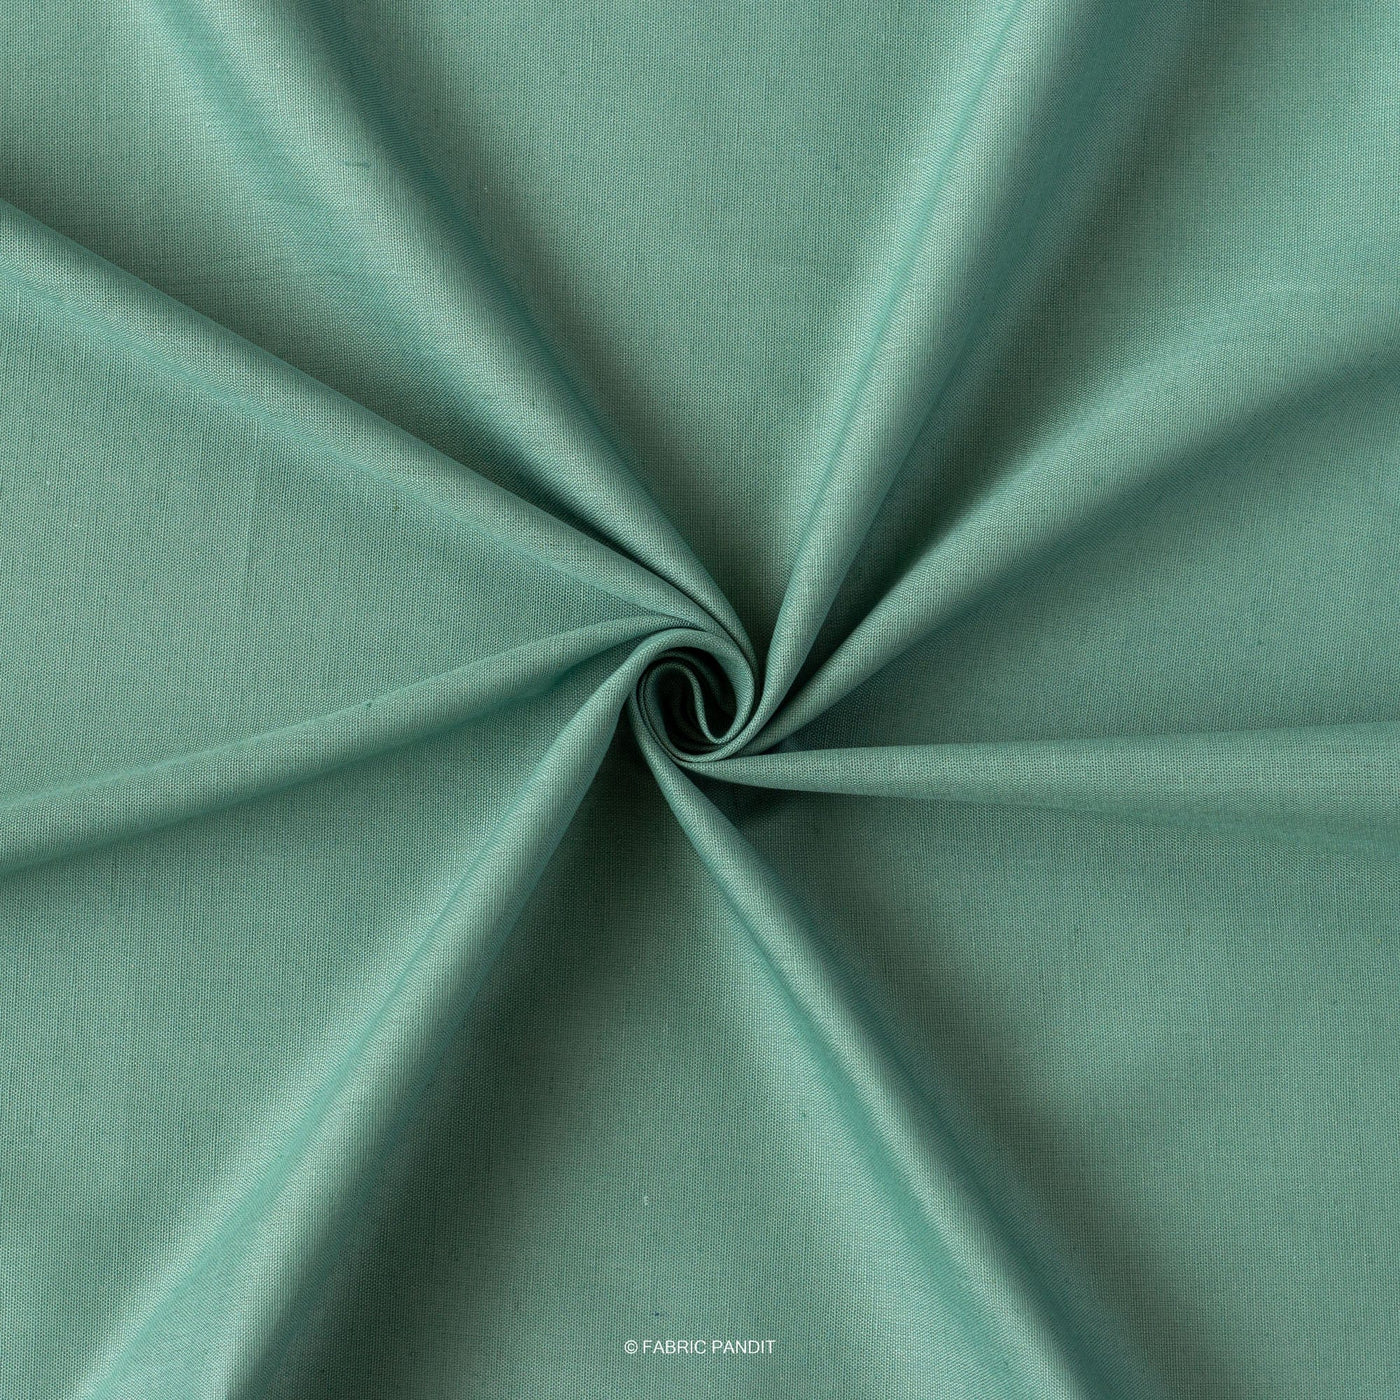 Fabric Pandit Cut Piece 0.25M (CUT PIECE) Aquamarine (Light) Color Pure Cotton Linen Fabric (Width 42 Inches)